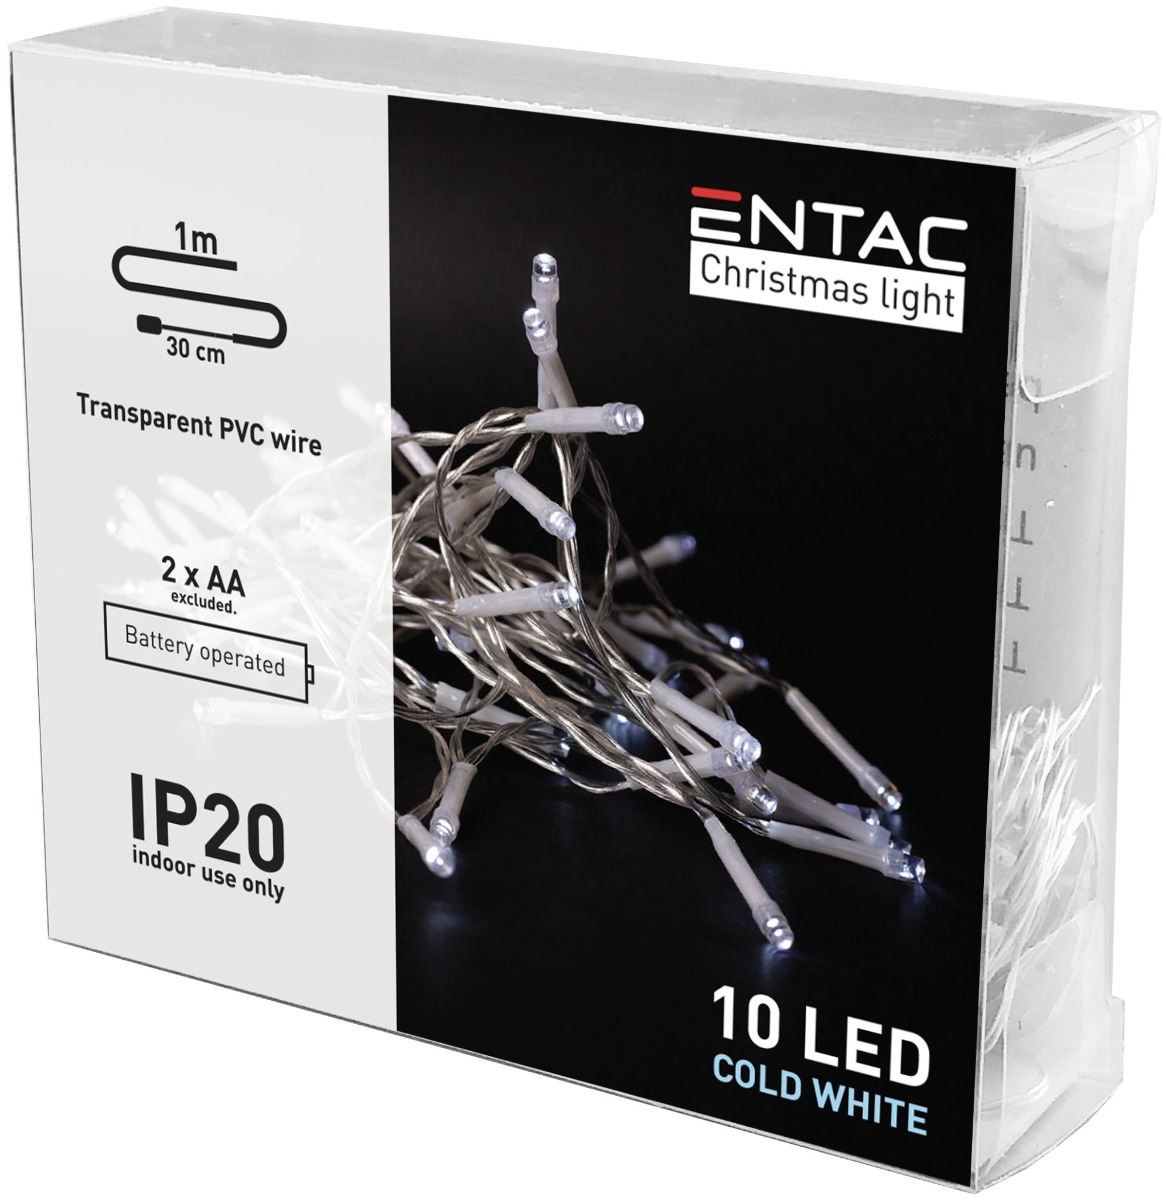 Entac Χριστουγεννιάτικα Εσωτερικά 10 LED Ψυχρό 1μ (2xAA Δεν περιλαμβ.)